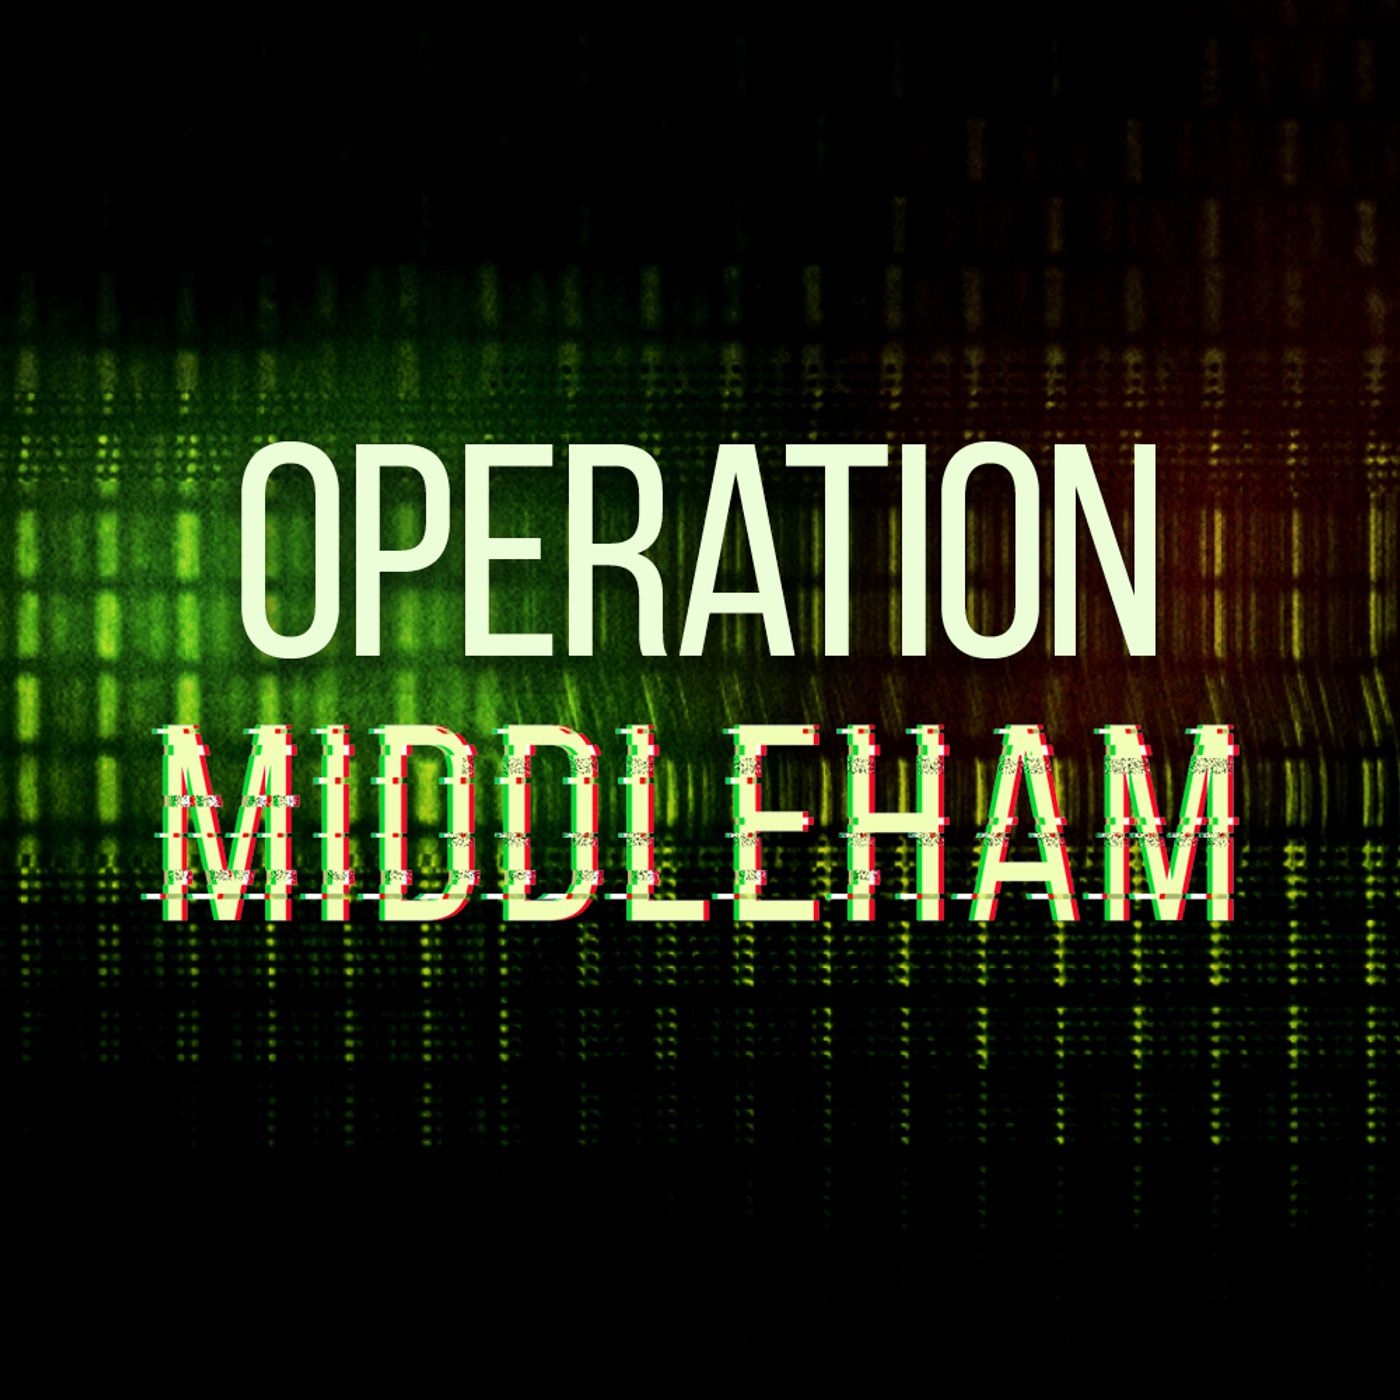 6: Operation Middleham